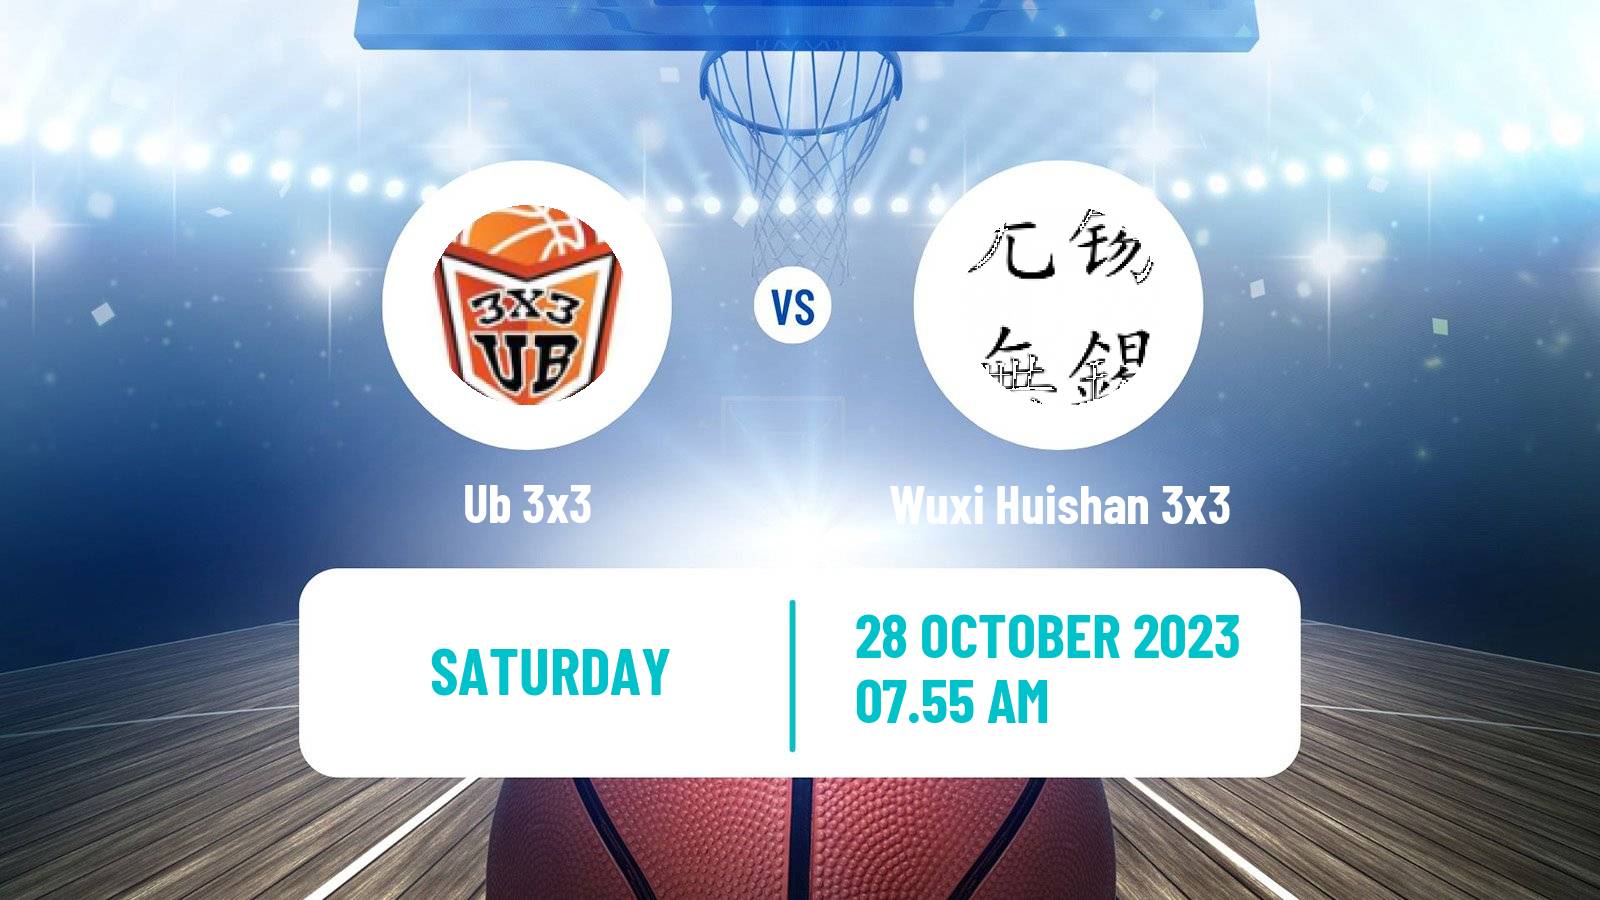 Basketball World Tour Abu Dhabi 3x3 Ub 3x3 - Wuxi Huishan 3x3